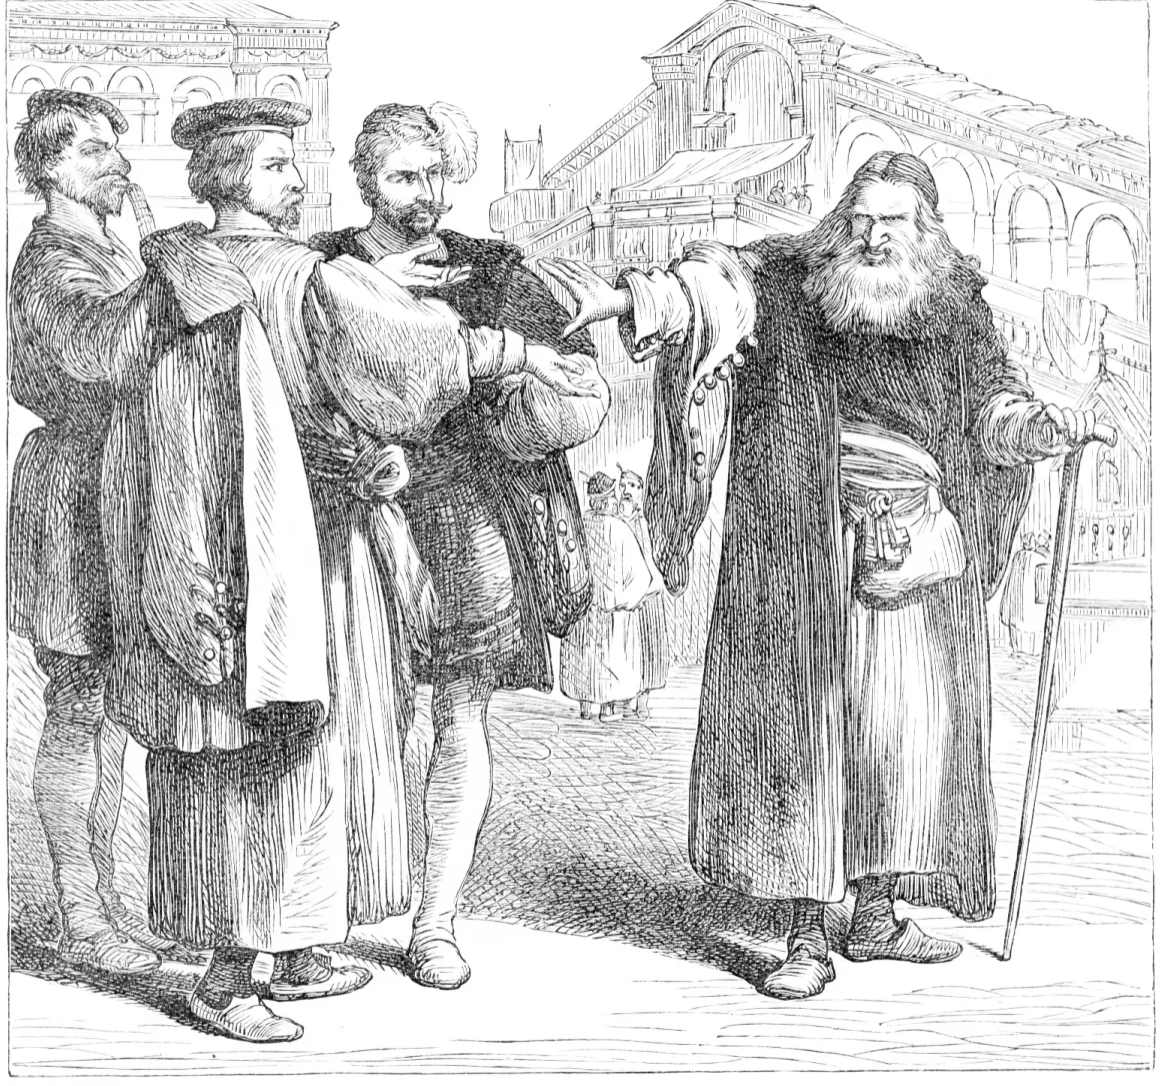 Shylock and Antonio in Merchant of Venice